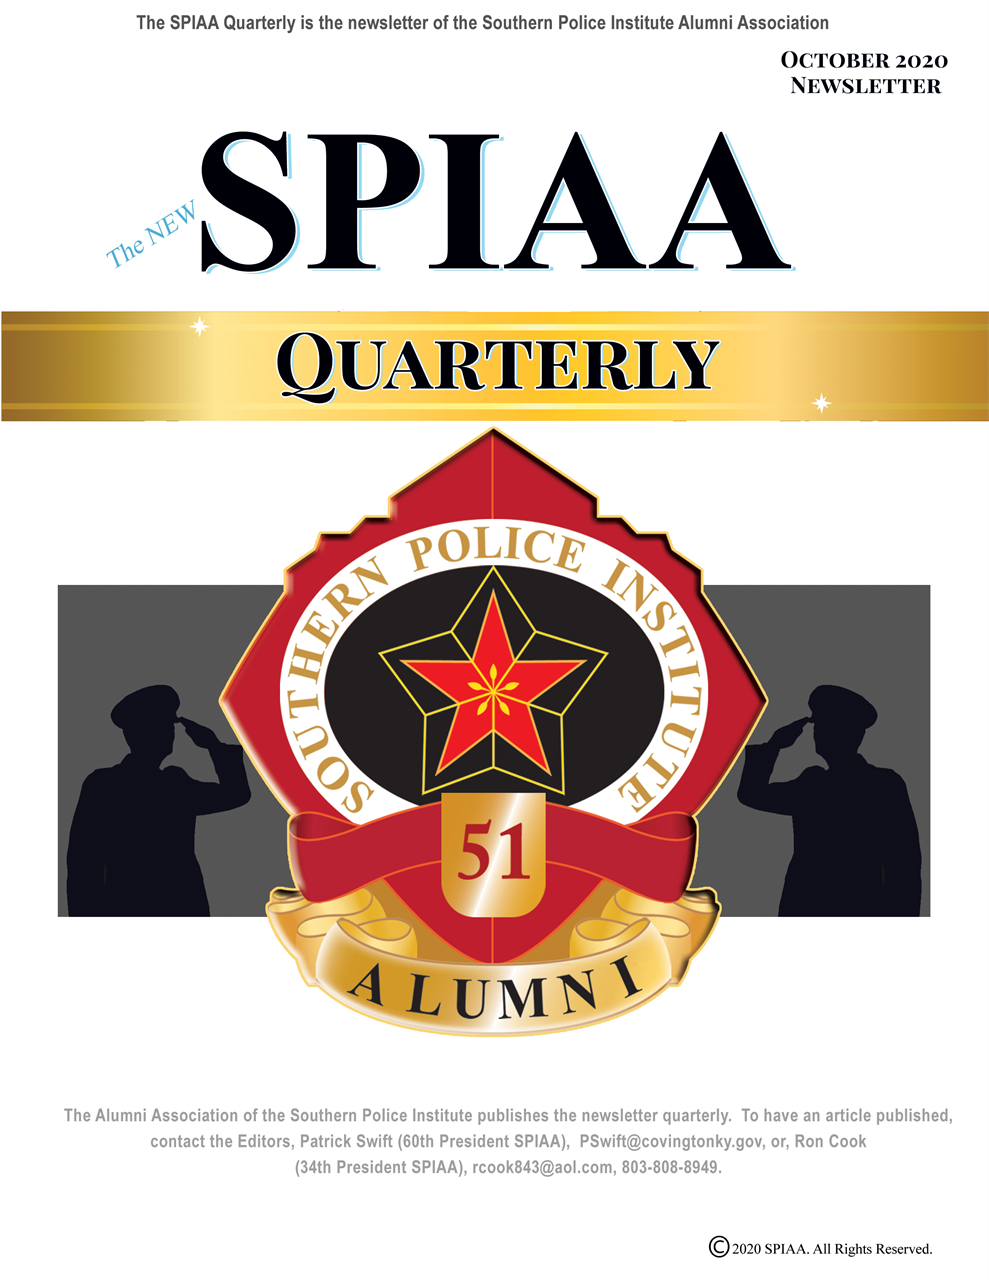 SPIAA Quarterly October 2020